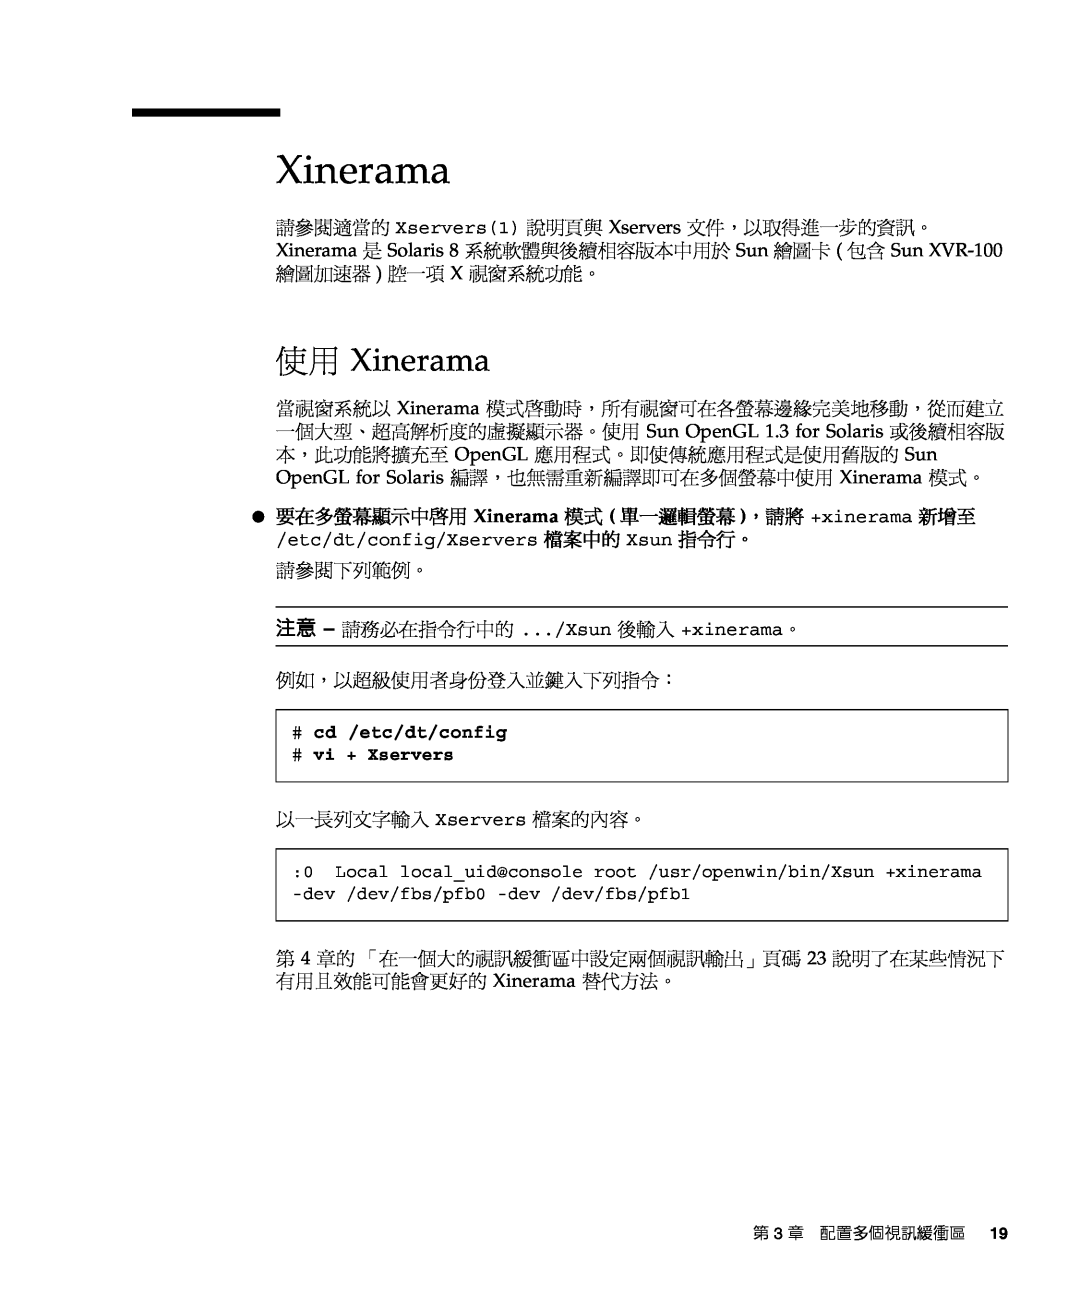 Sun Microsystems XVR-100 manual 使用 Xinerama, 要在多螢幕顯示中啟用 Xinerama 模式 單一邏輯螢幕 ，請將 +xinerama 新增至, # cd /etc/dt/config 